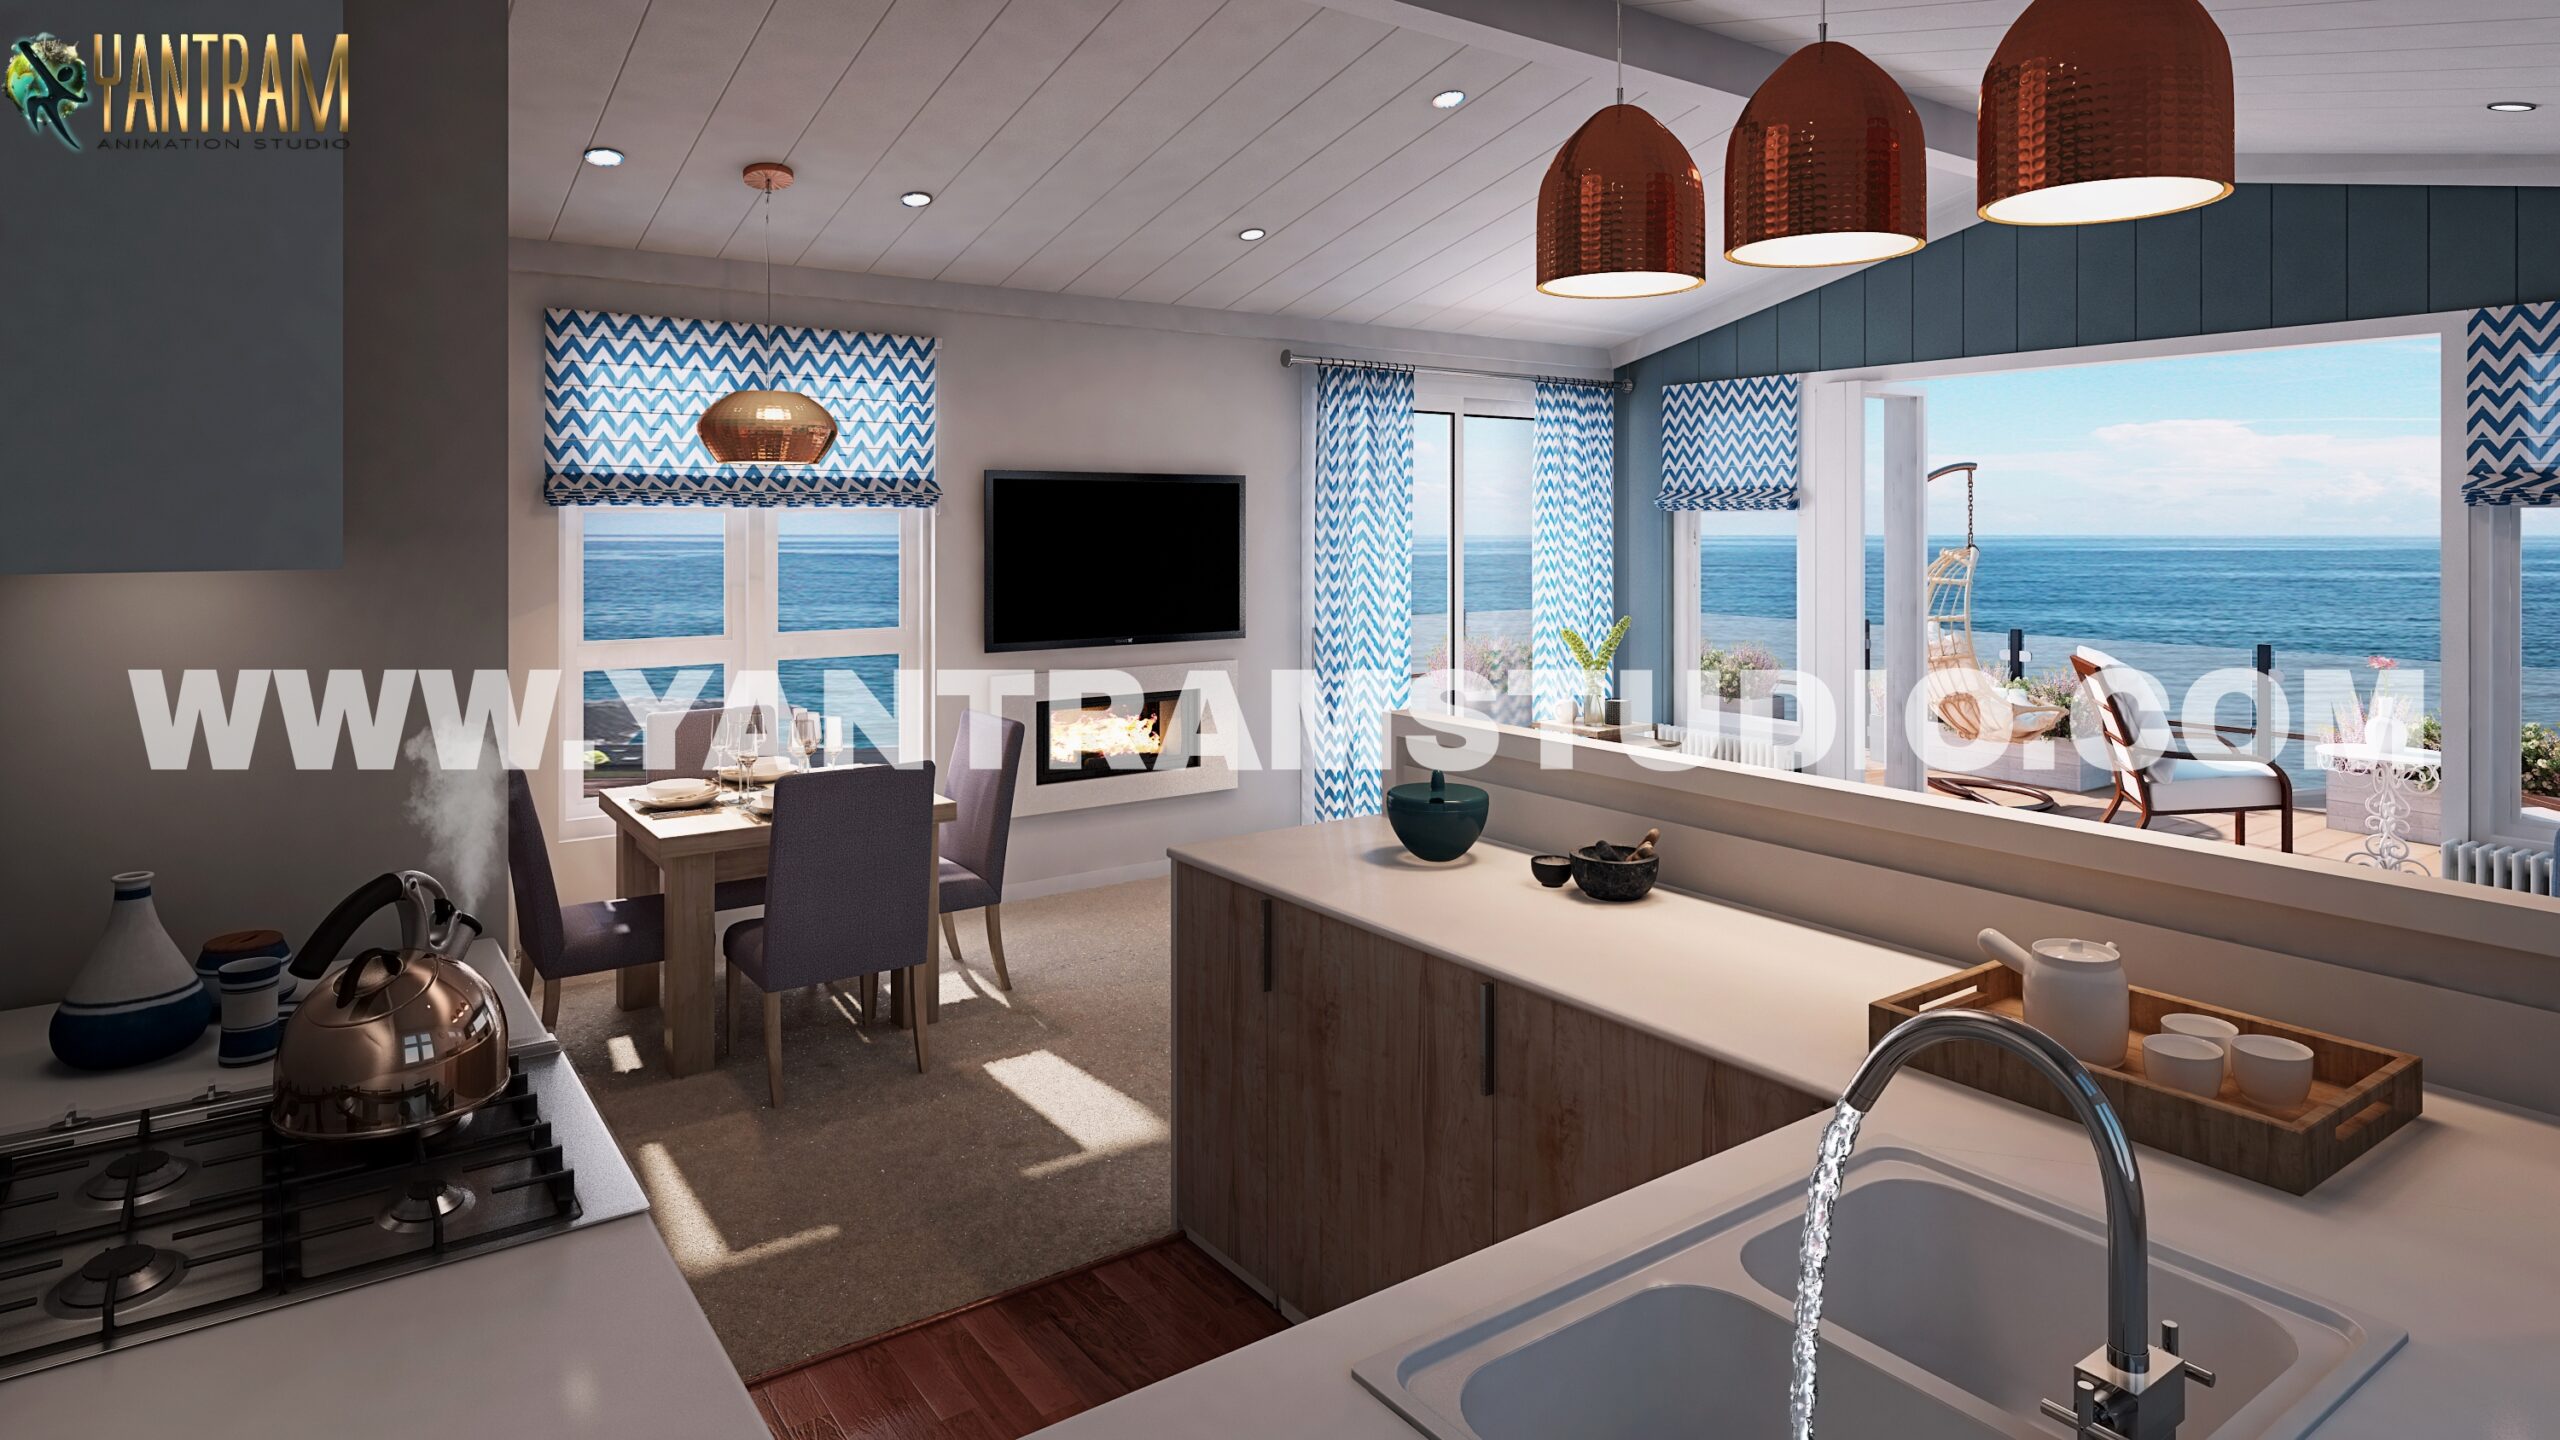 3d interior Modeling of amazing kitchen living room by Yantram Architectural design Studio, Austin- Texas